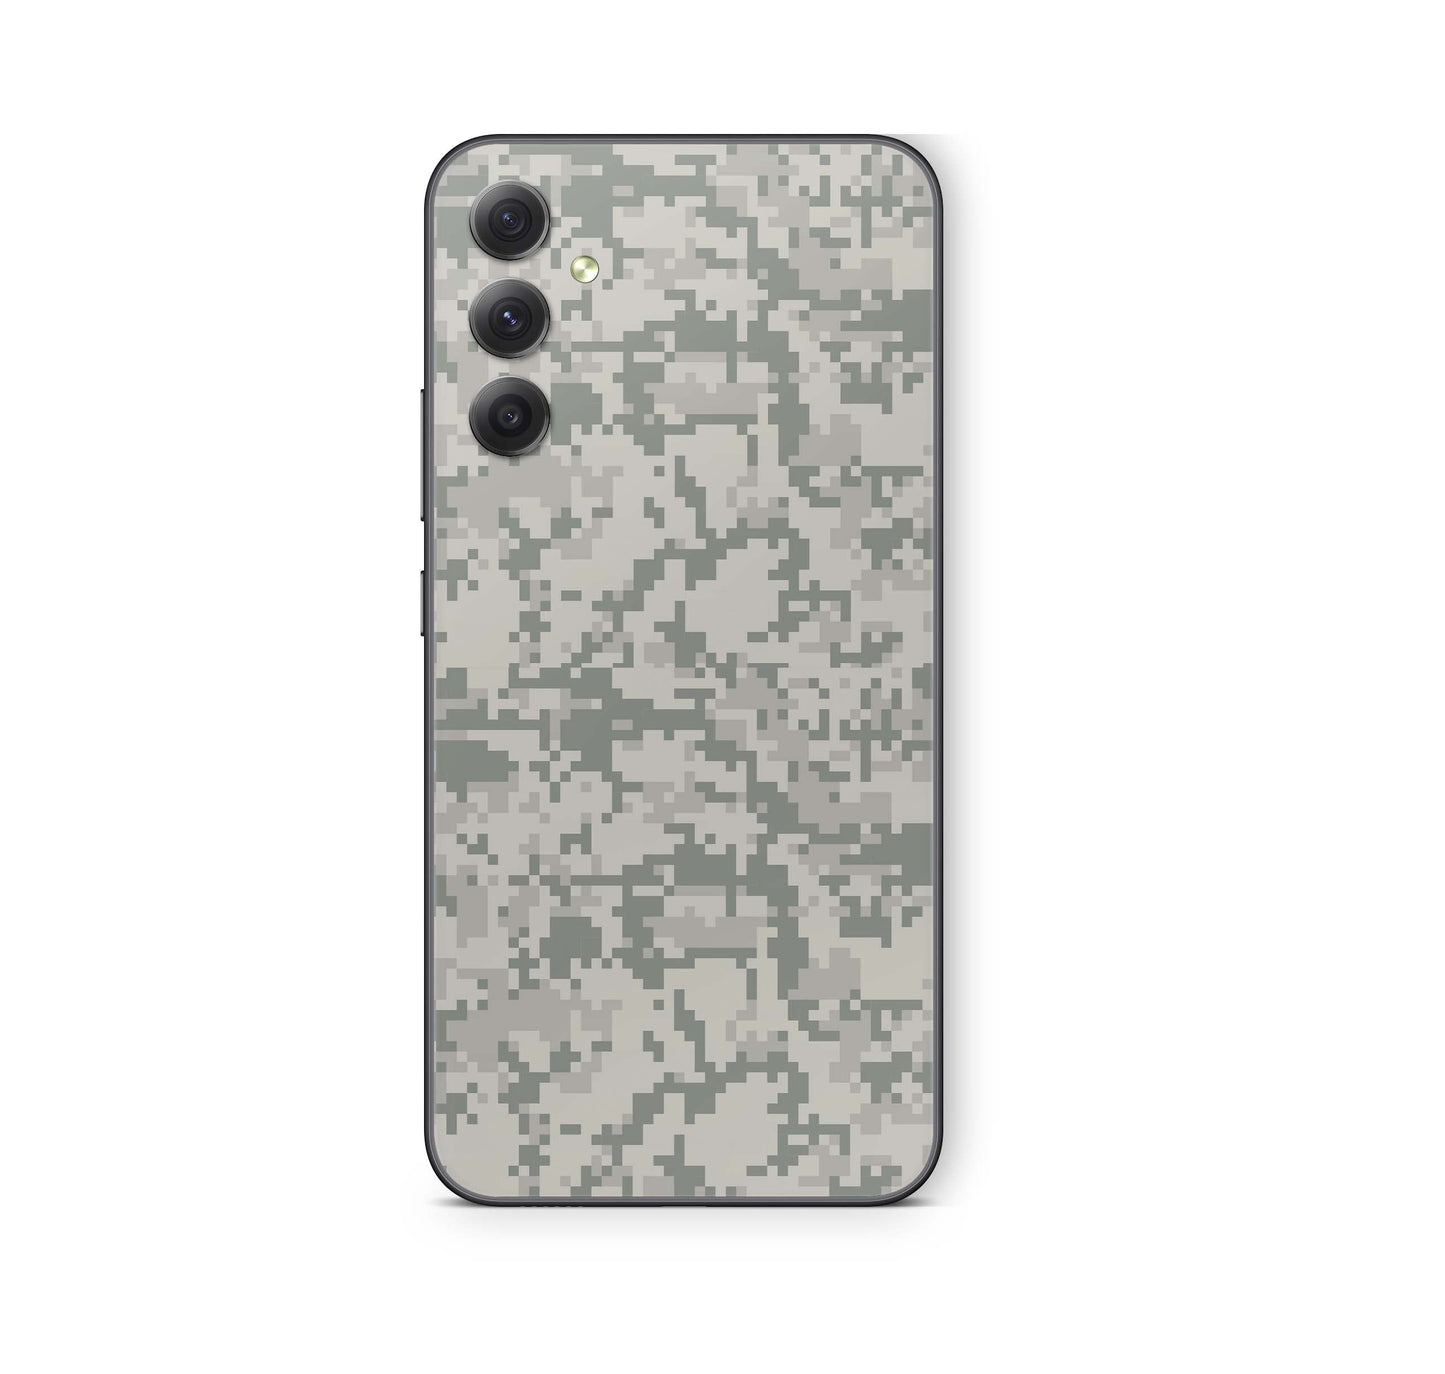 Samsung Galaxy A51 Skin Schutzfolie Aufkleber Skins Design Acu Camo Elektronik-Sticker & -Aufkleber skins4u   